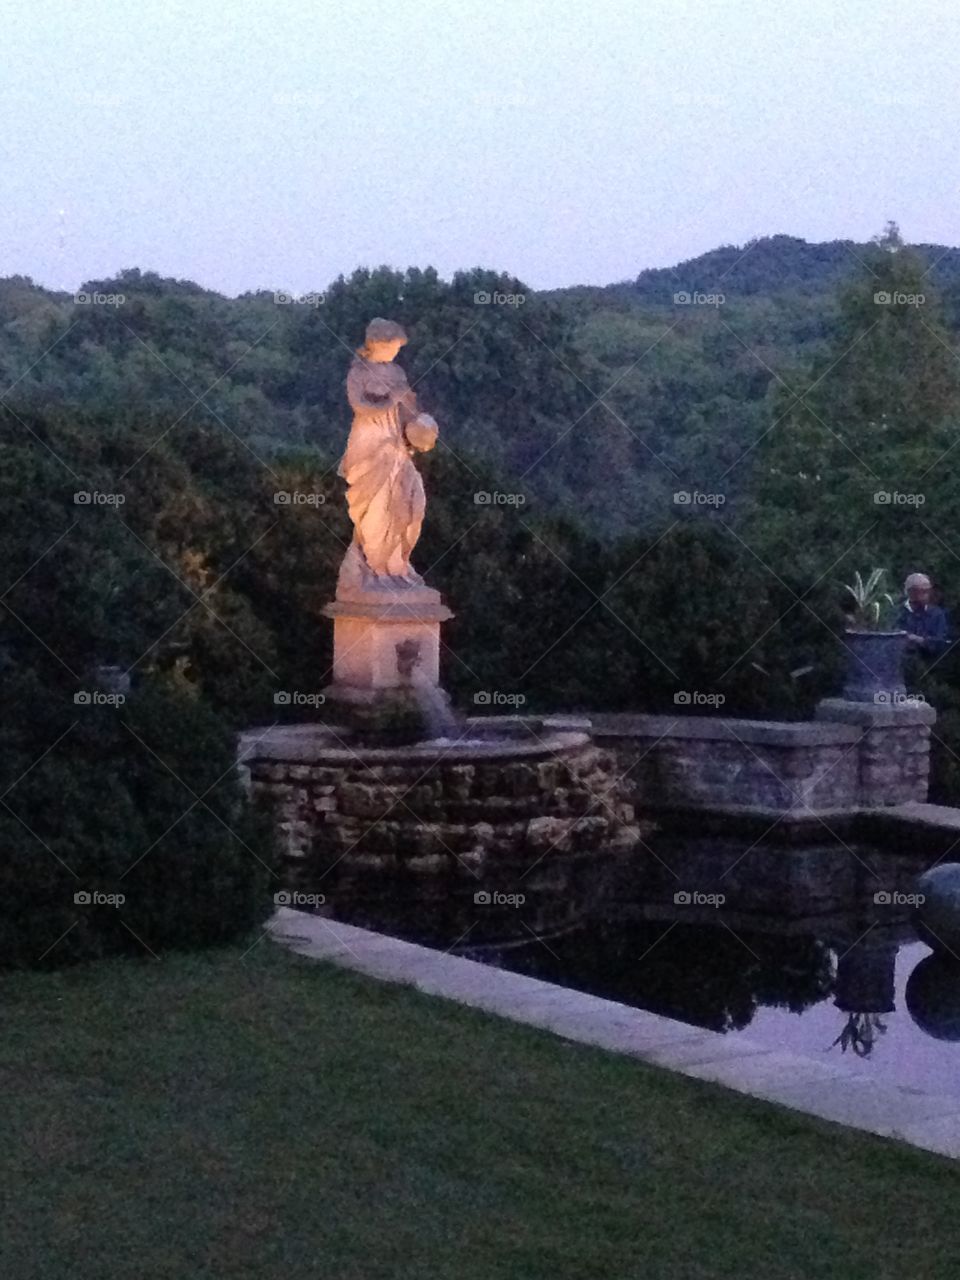 Gardens of Cheekwood. Nashville mansion and grounds illuminated 